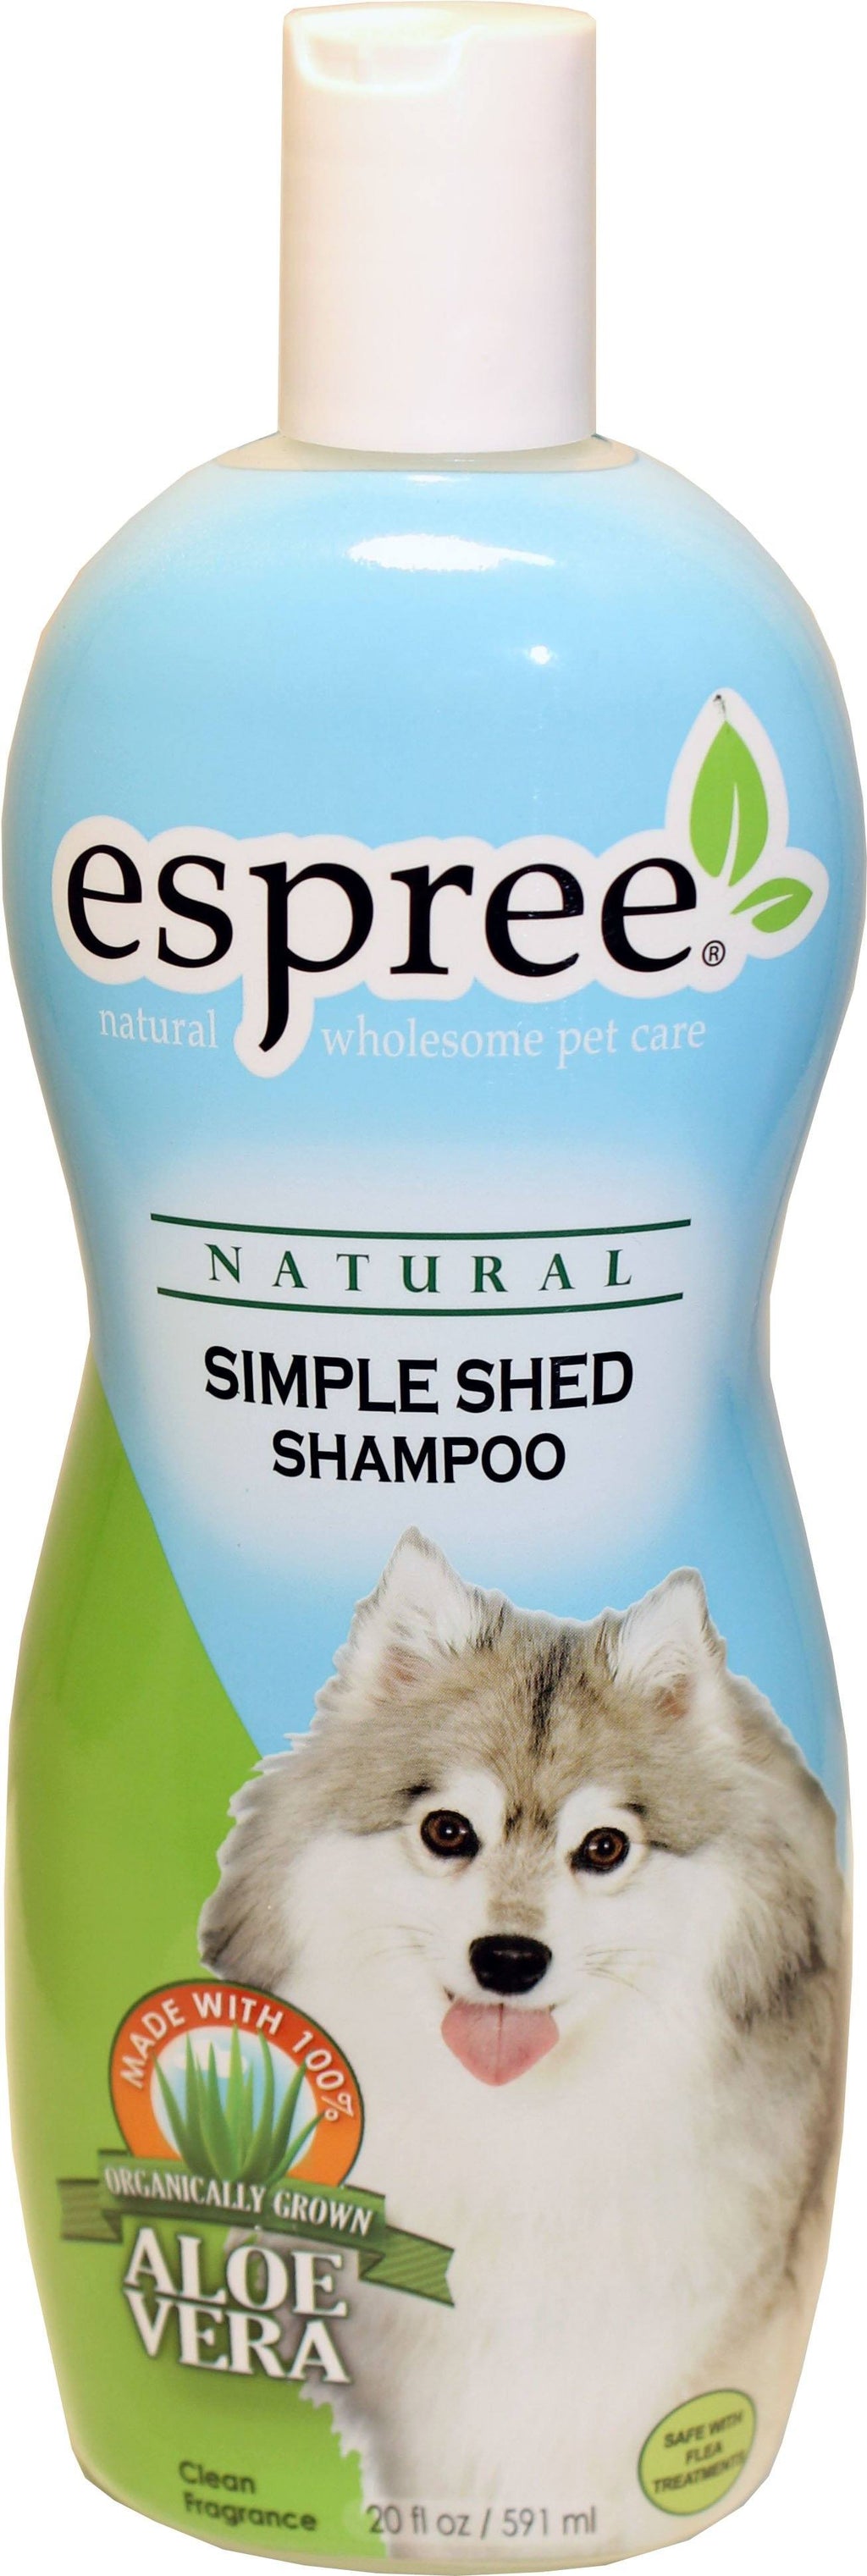 Espree Simple Shed Shampoo - 20 oz Bottle  